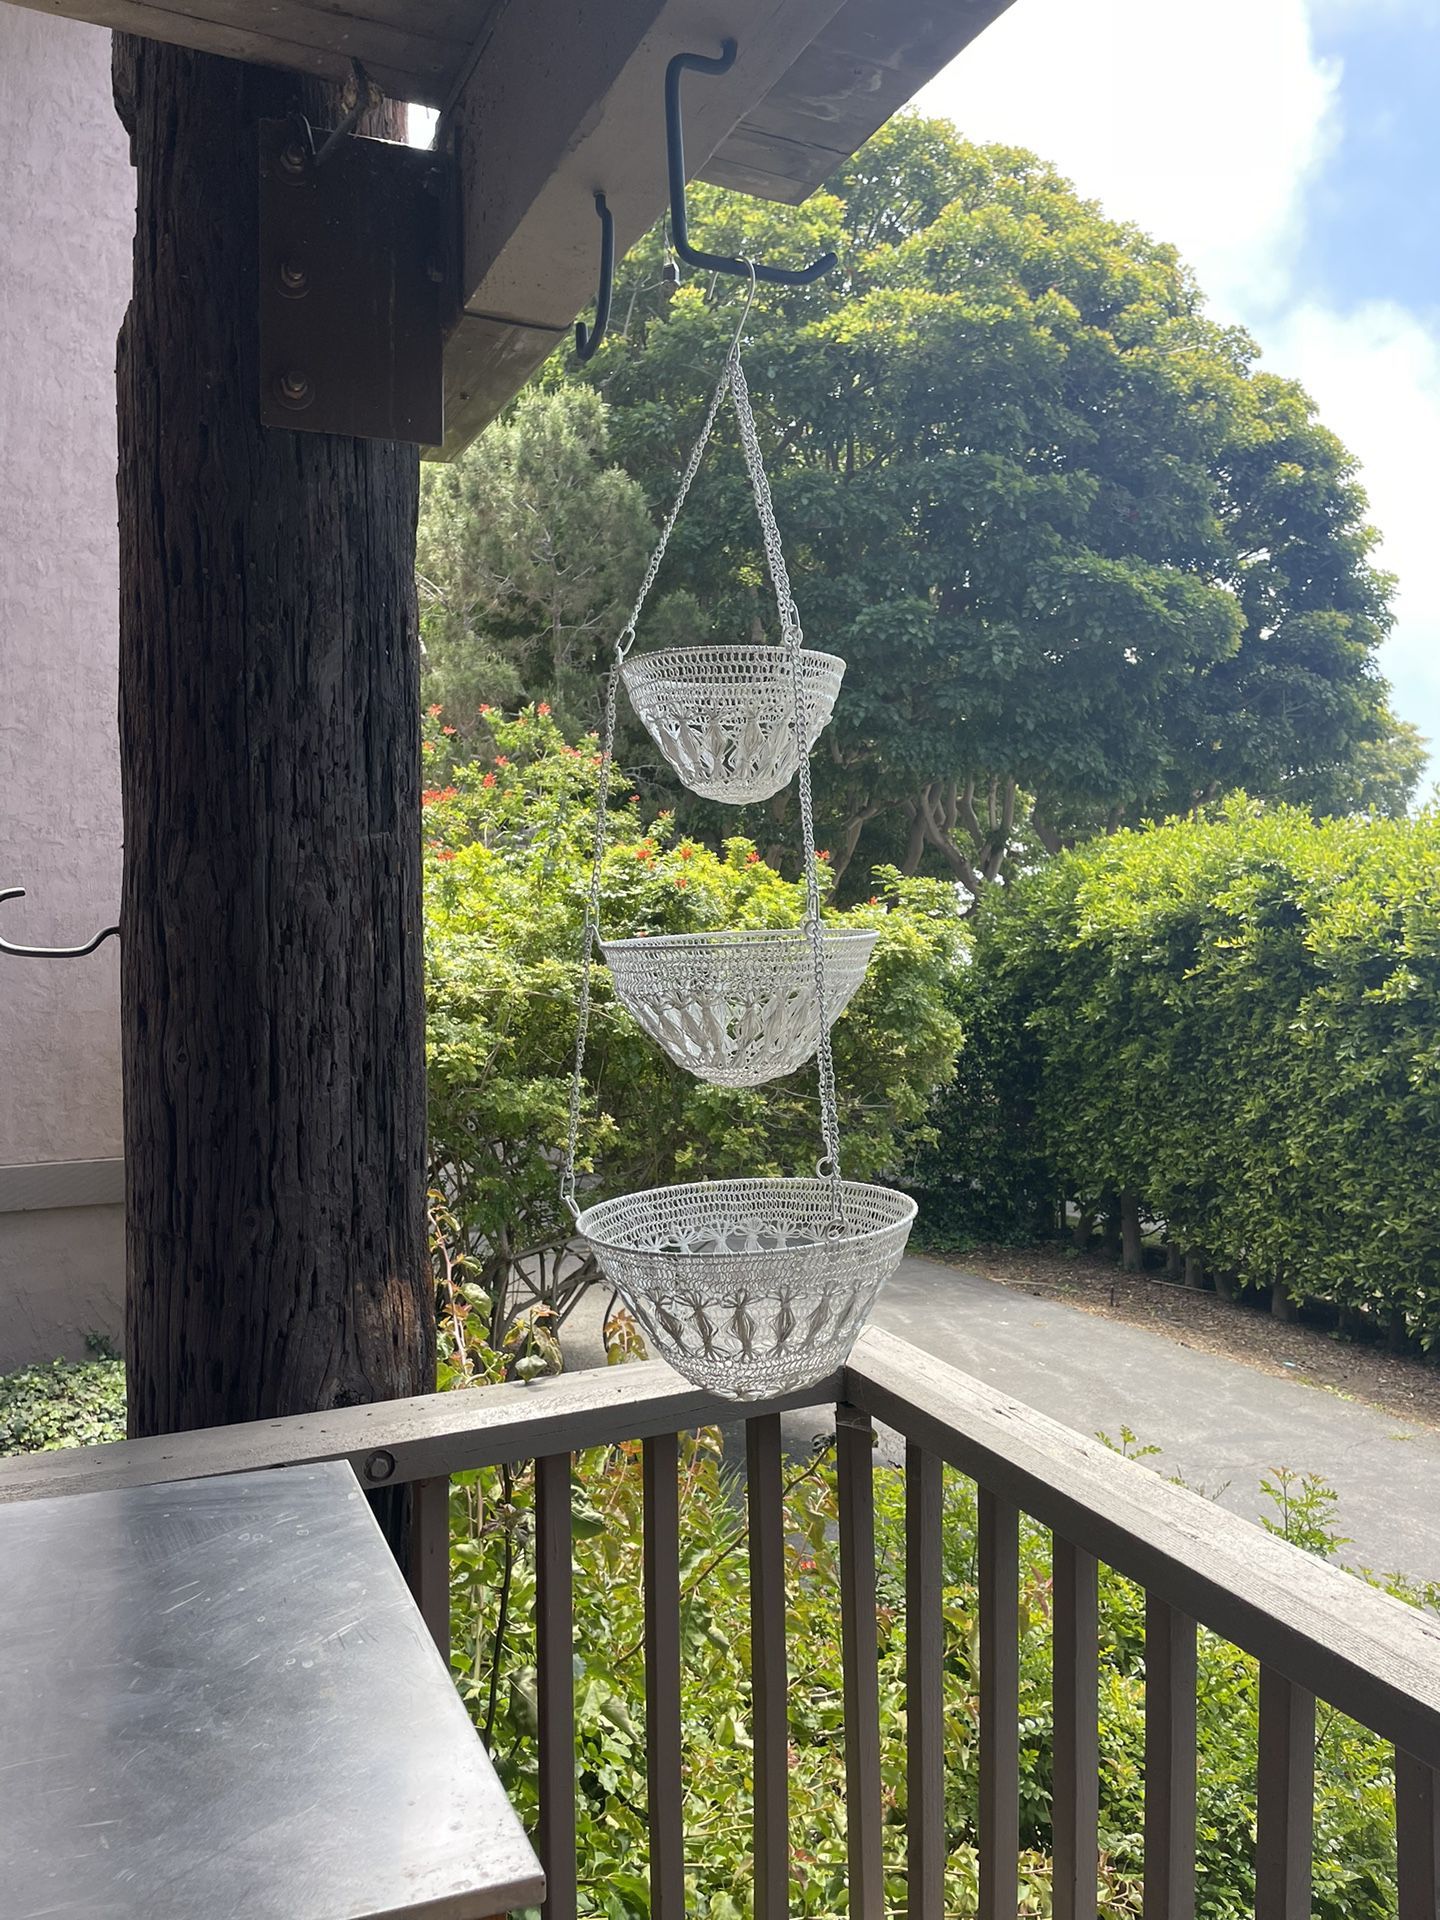 3 Tier Hanging Basket Metal With White Finish